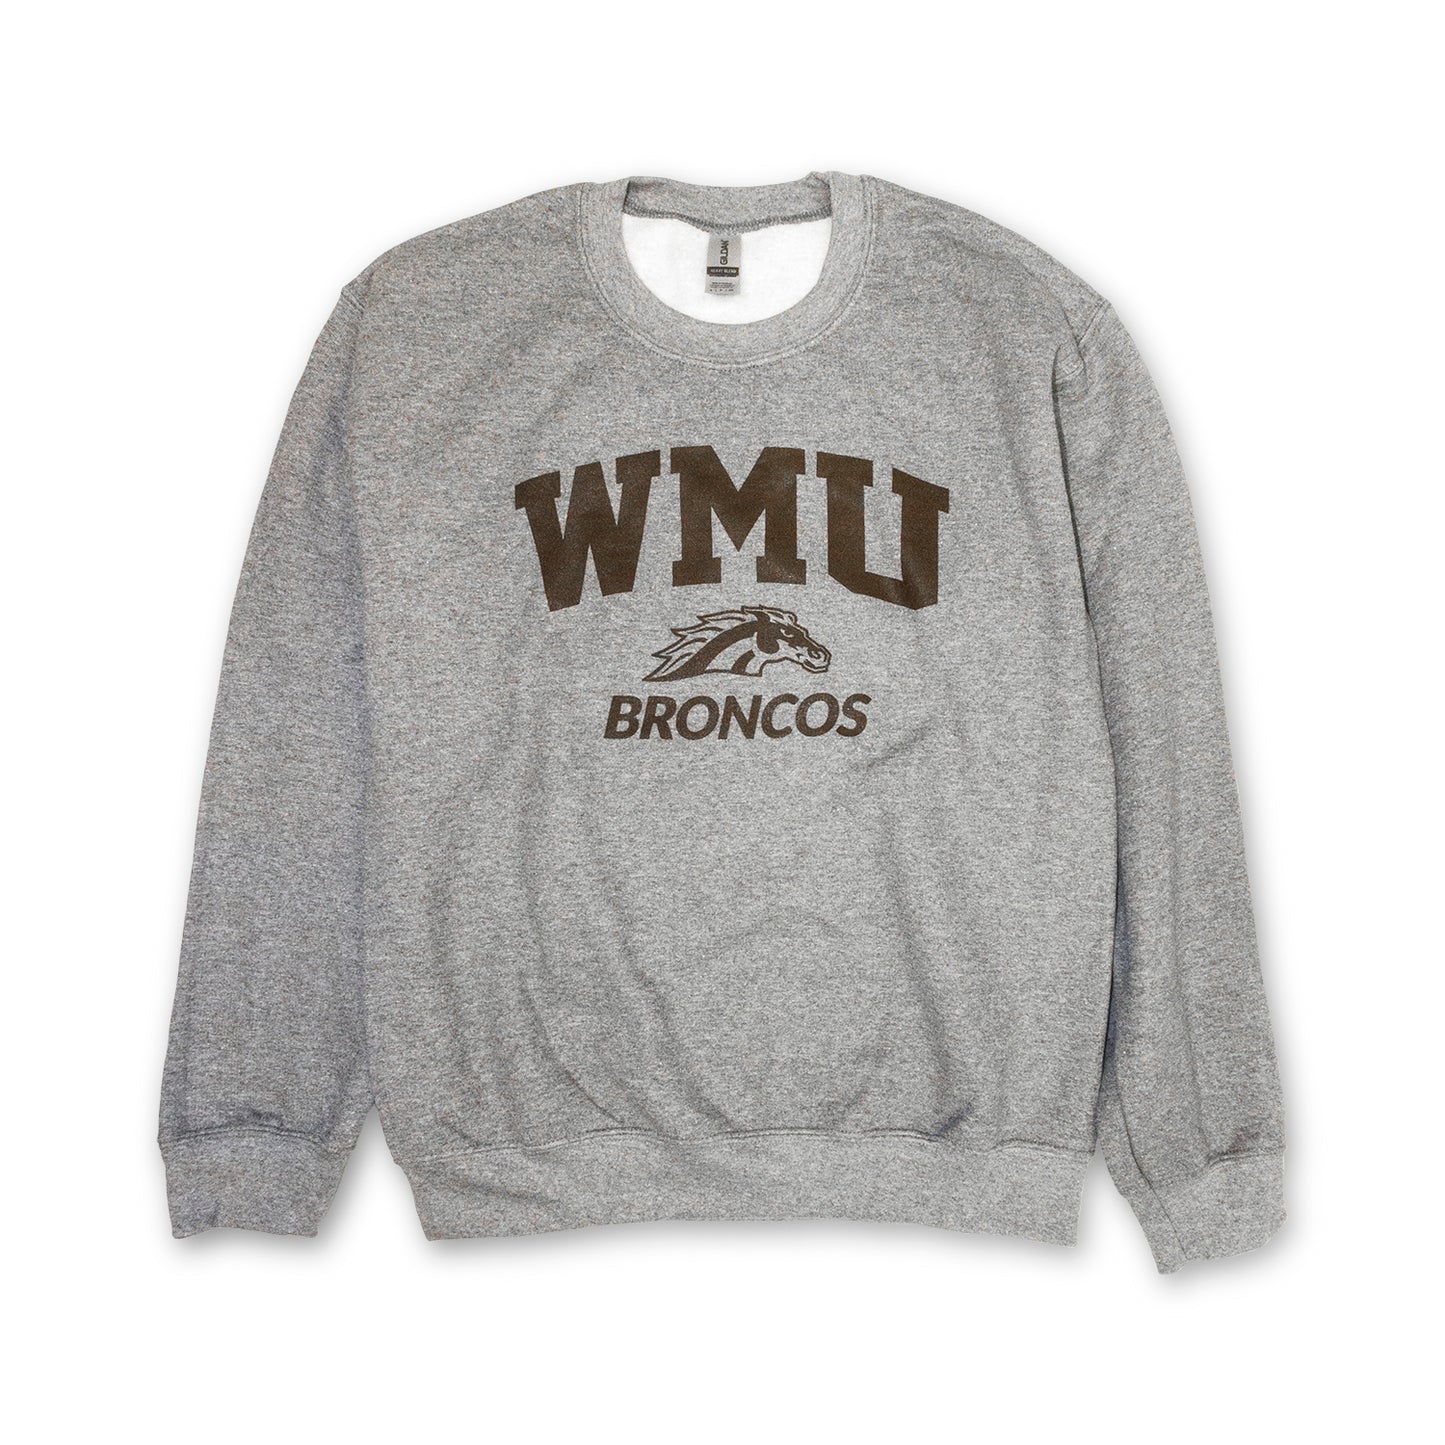 WMU Broncos Crewneck